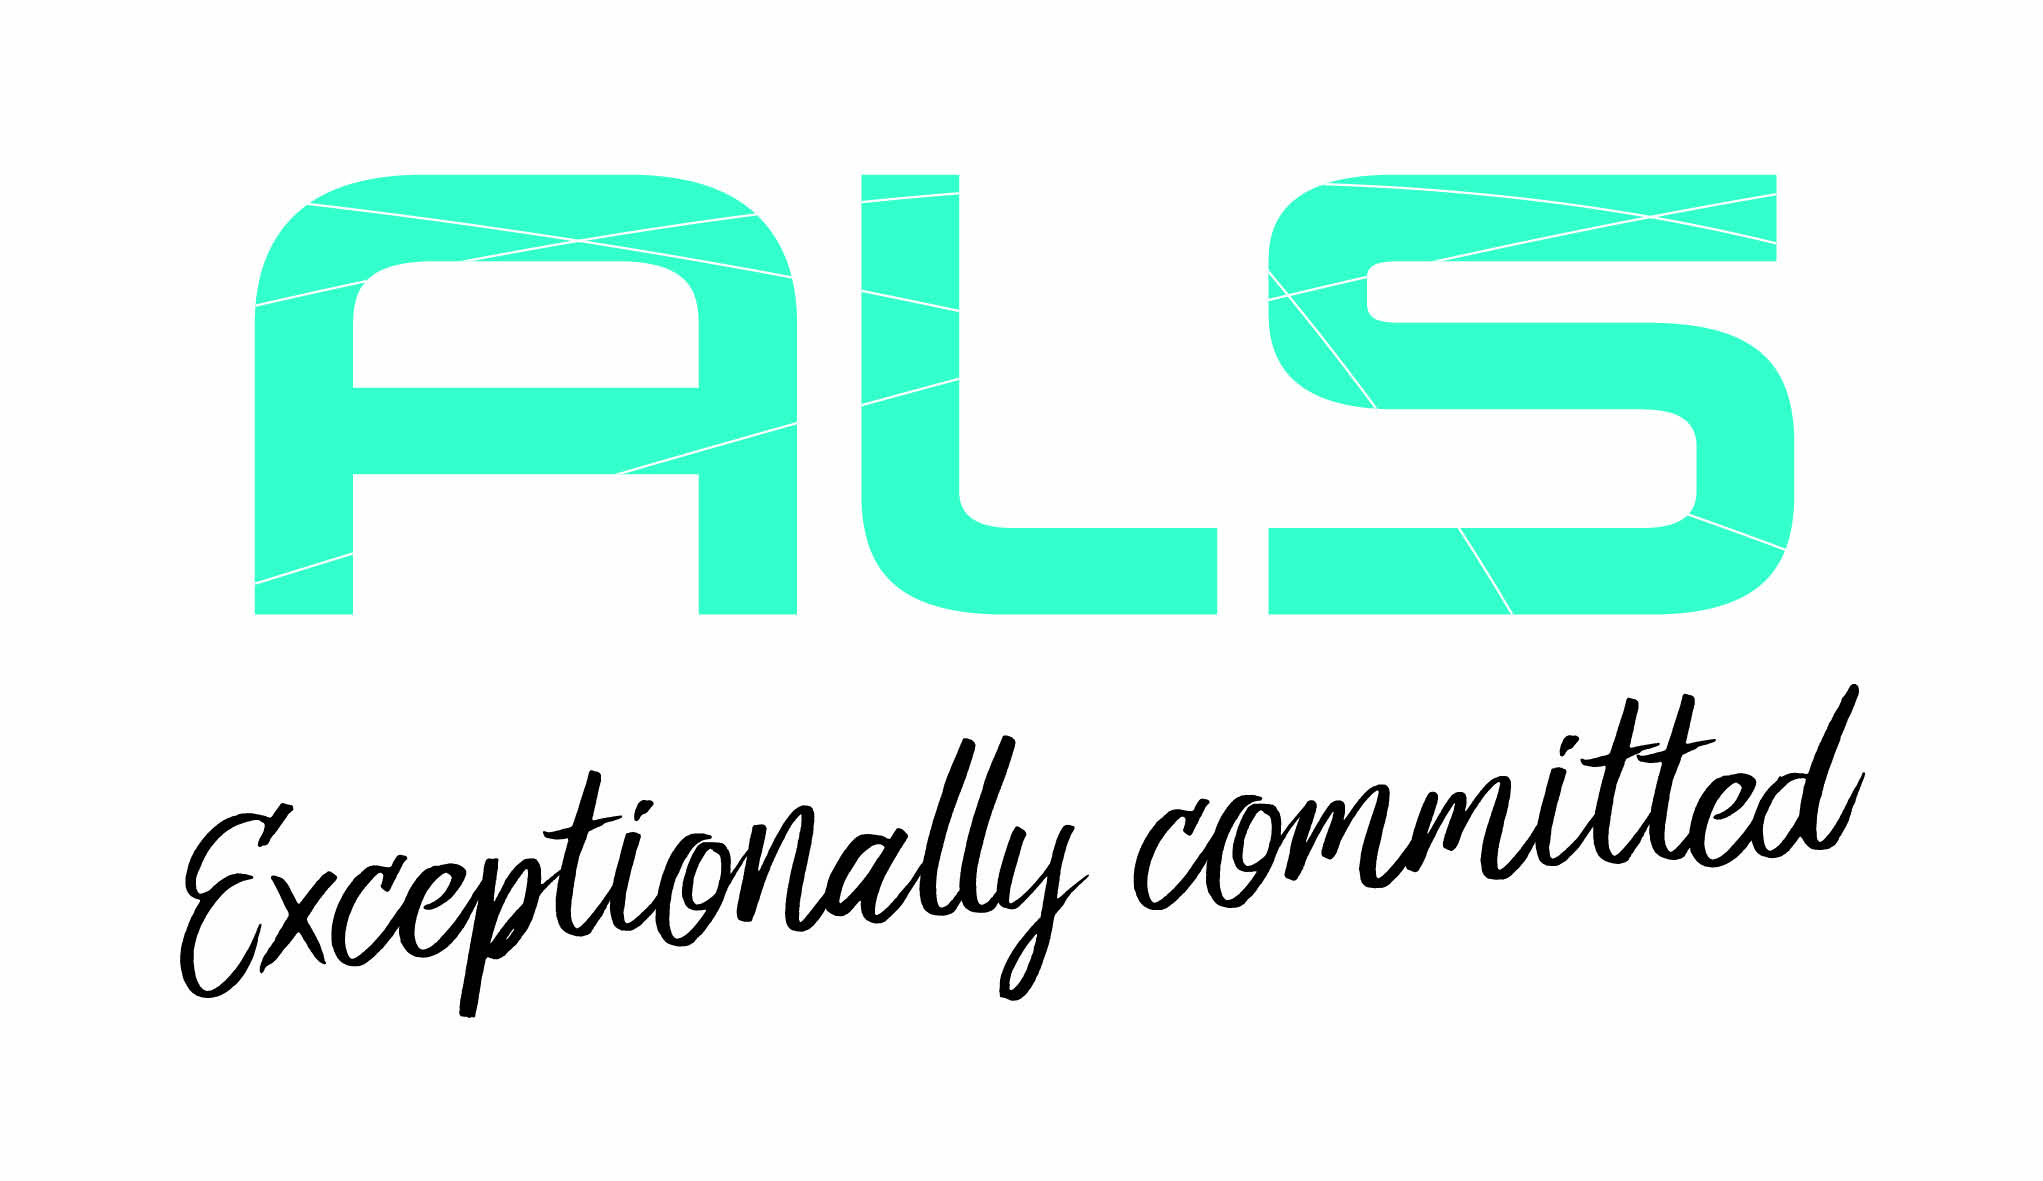 Abnormal Load Services - ALS